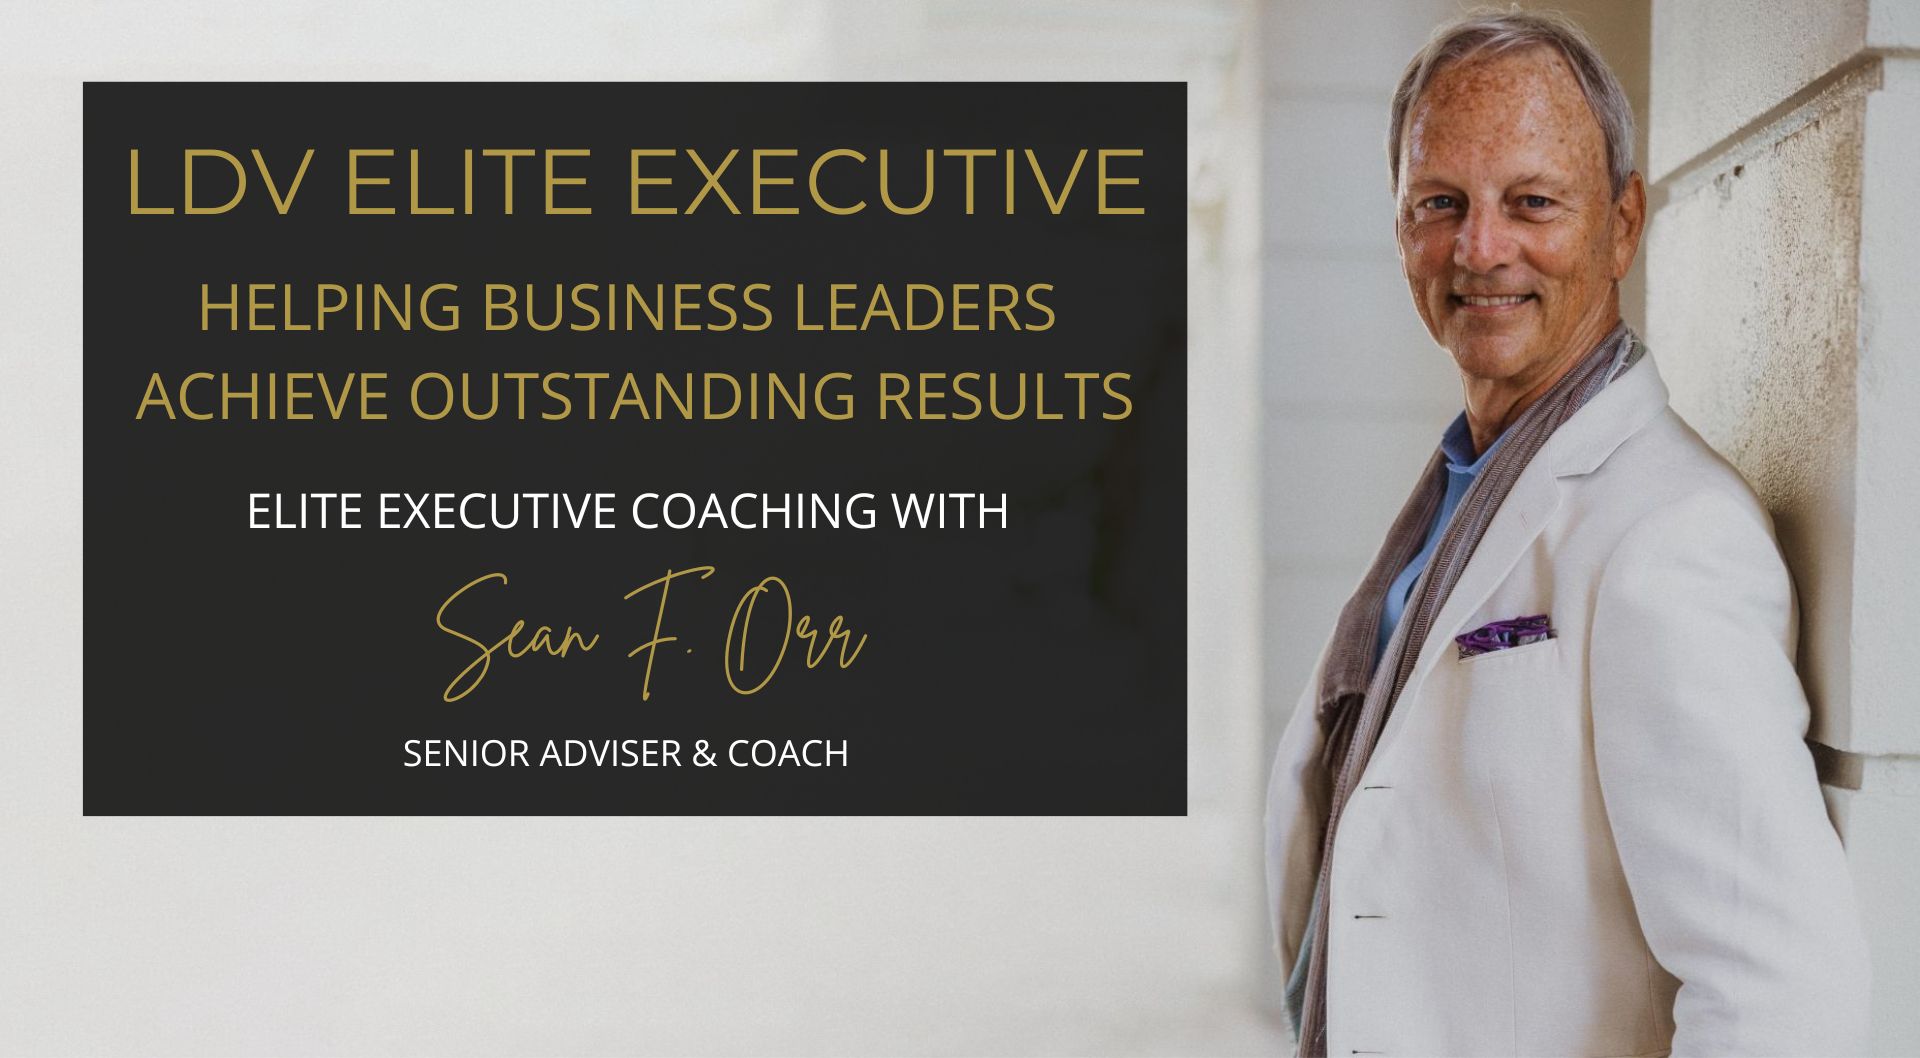 LDV ELITE EXECUTIVE program with Sean F. Orr executive coaching